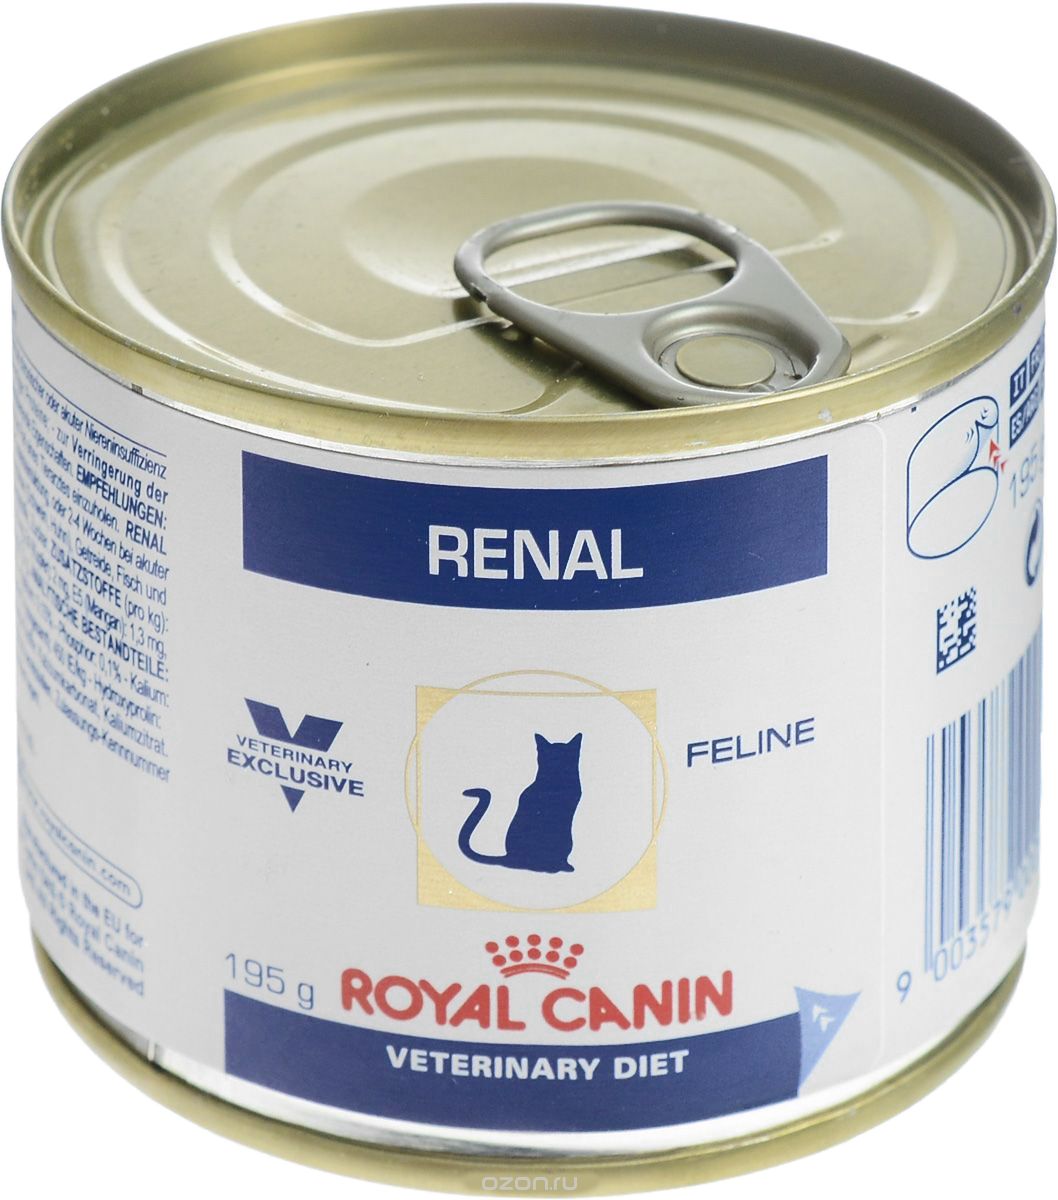    Royal Canin 